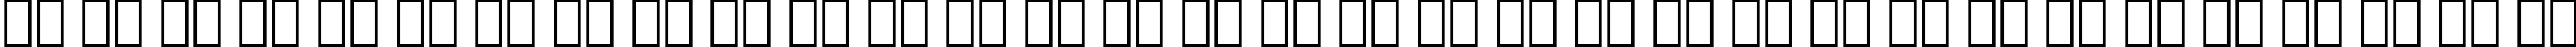 Пример написания русского алфавита шрифтом Copperplate Gothic Bold Condensed BT